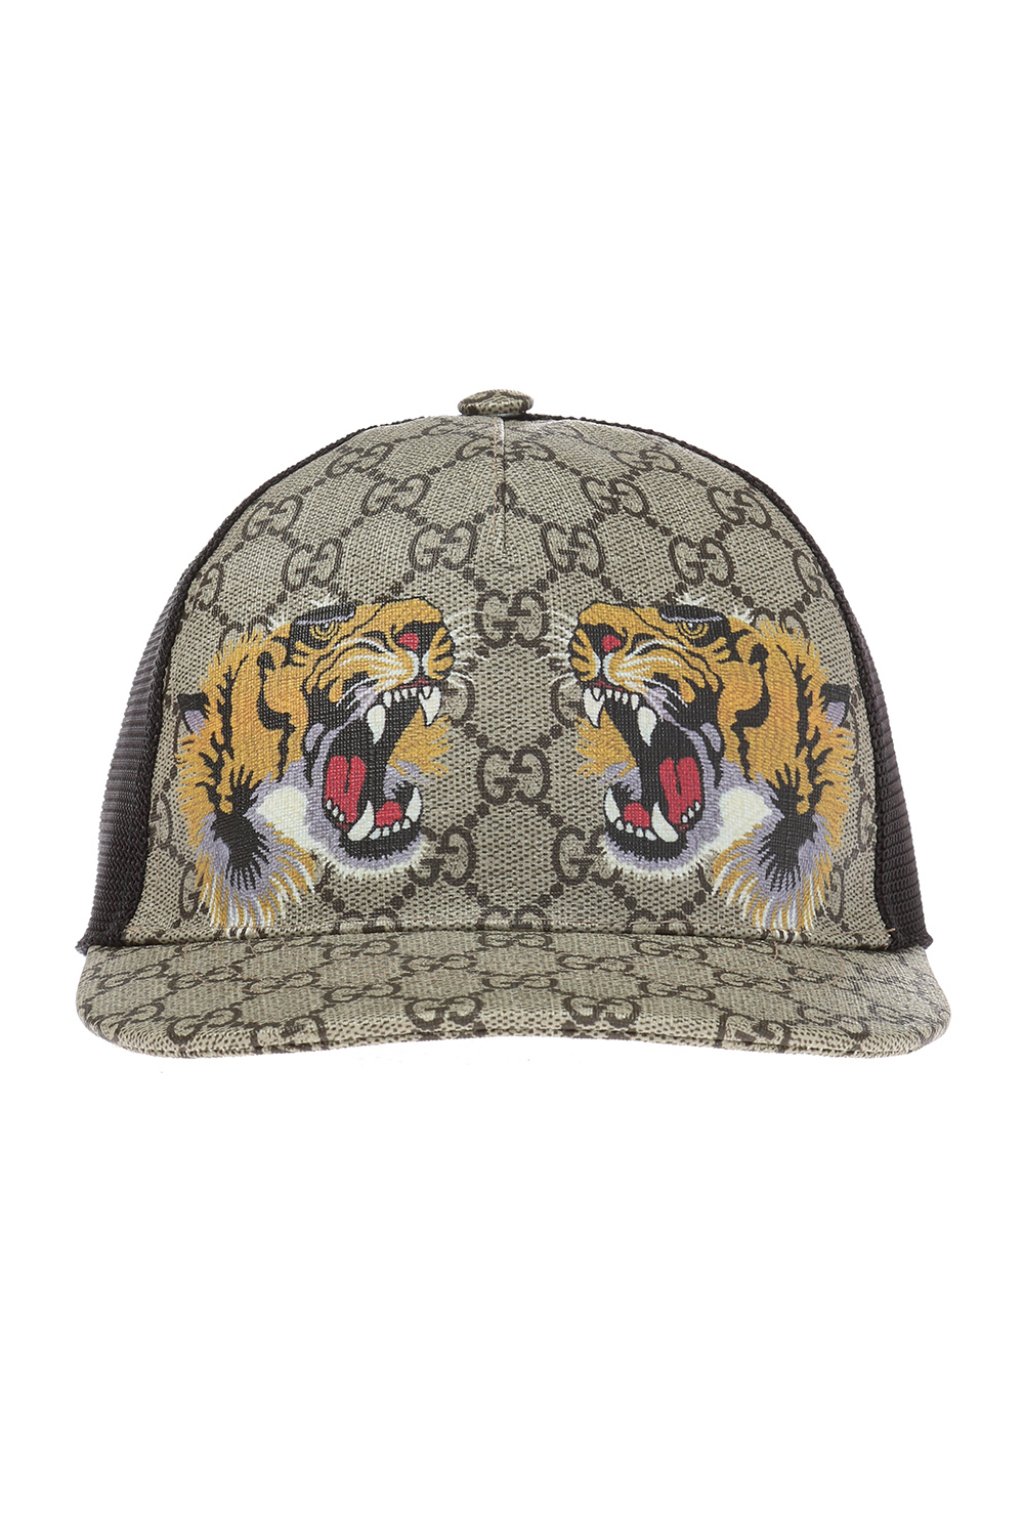 Gucci Baseball cap with a print